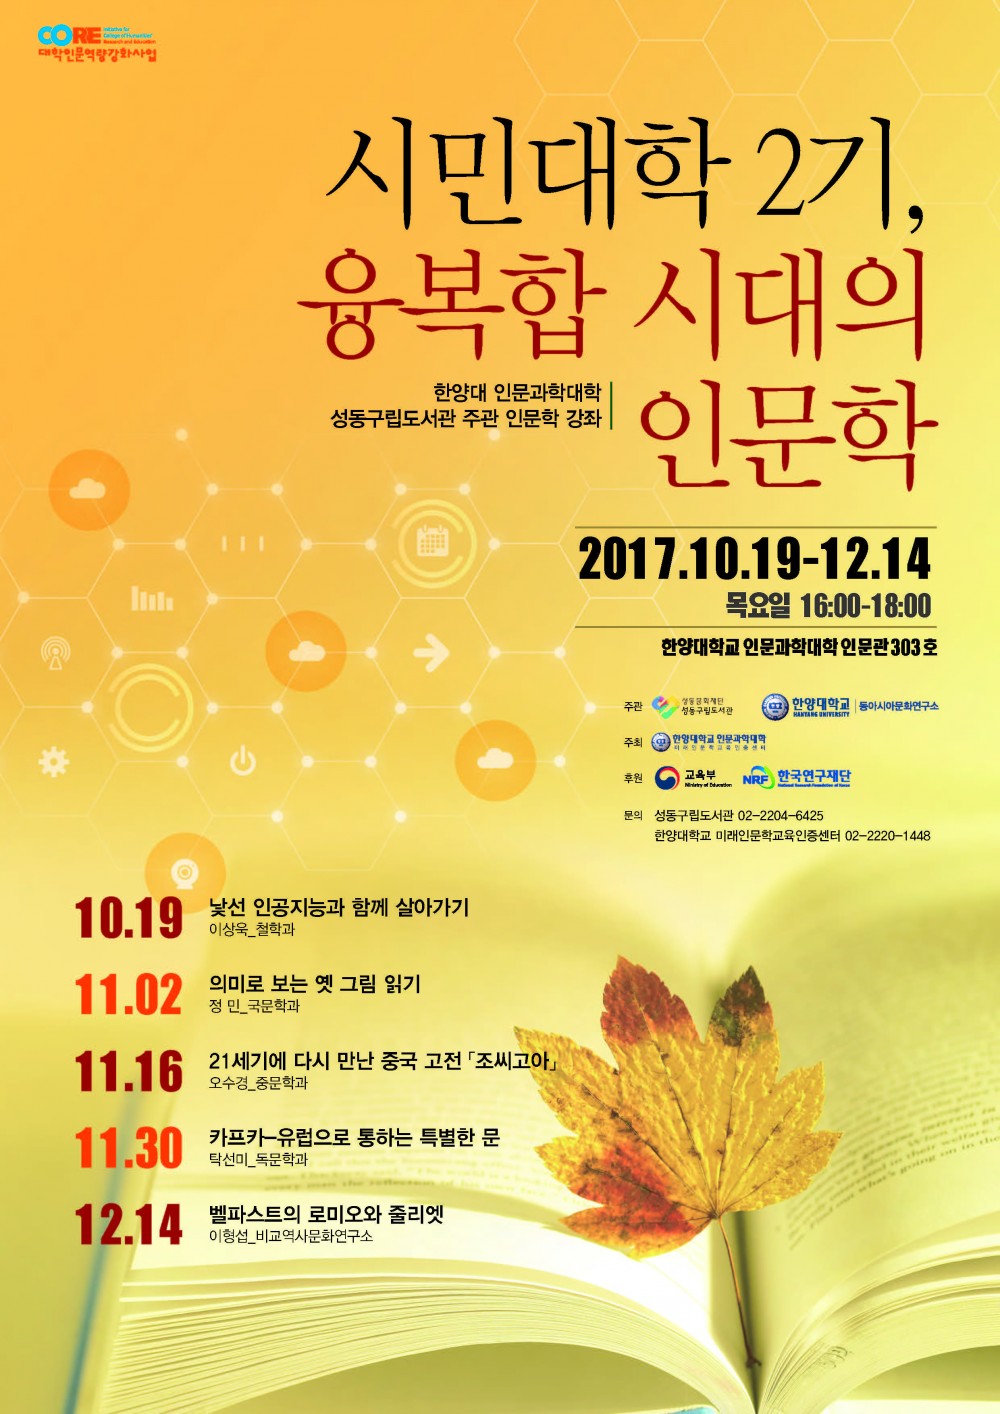 CORE_시민대학2기 포스터